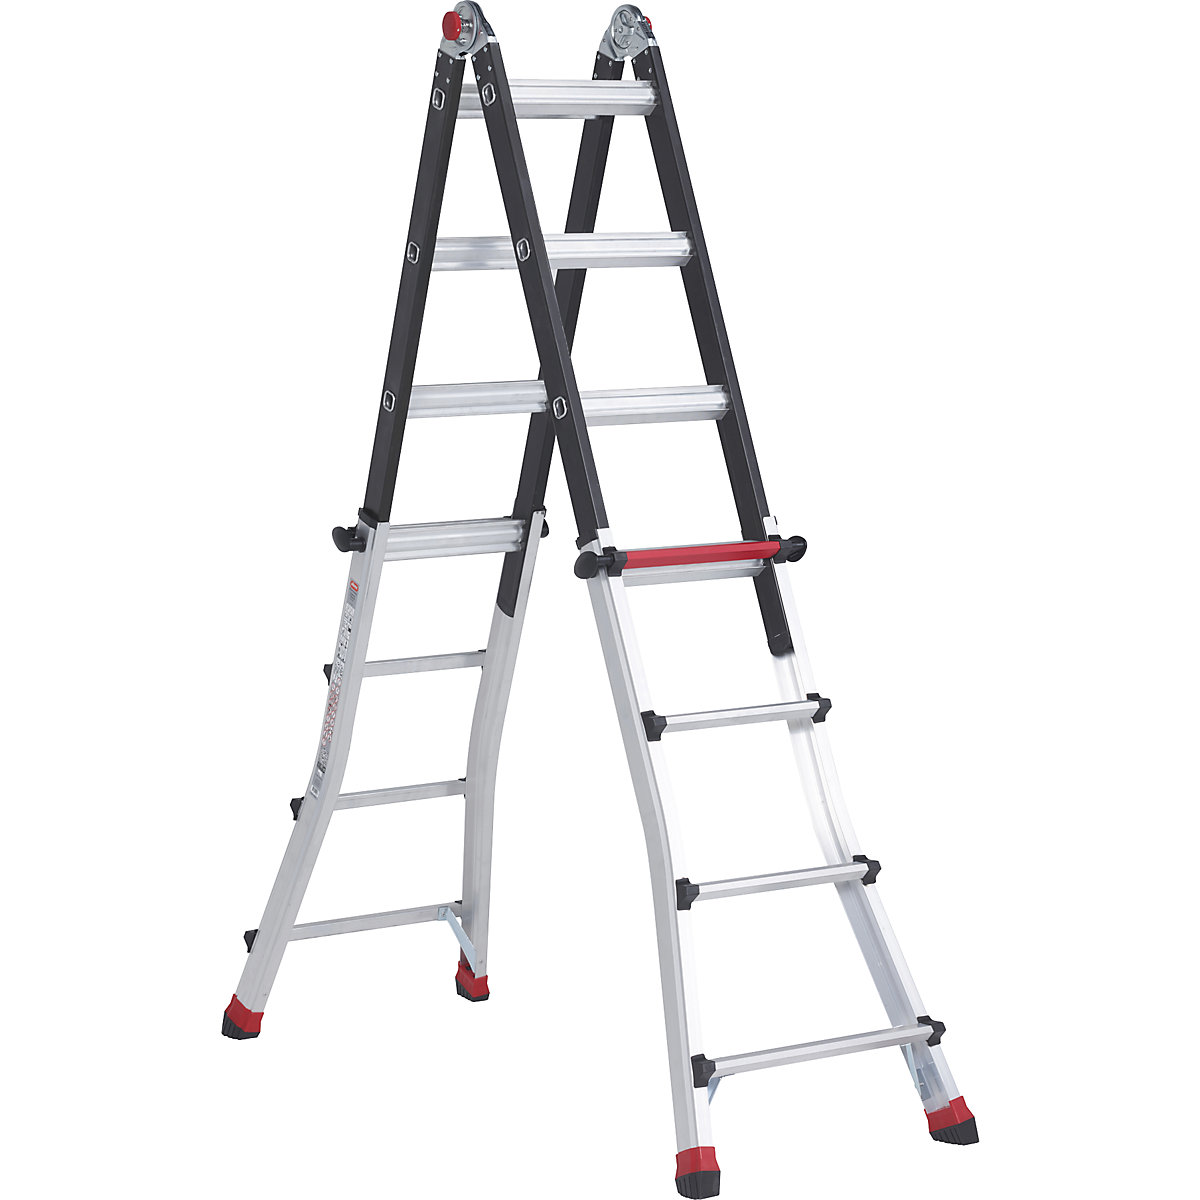 Telescopic folding ladder - Altrex